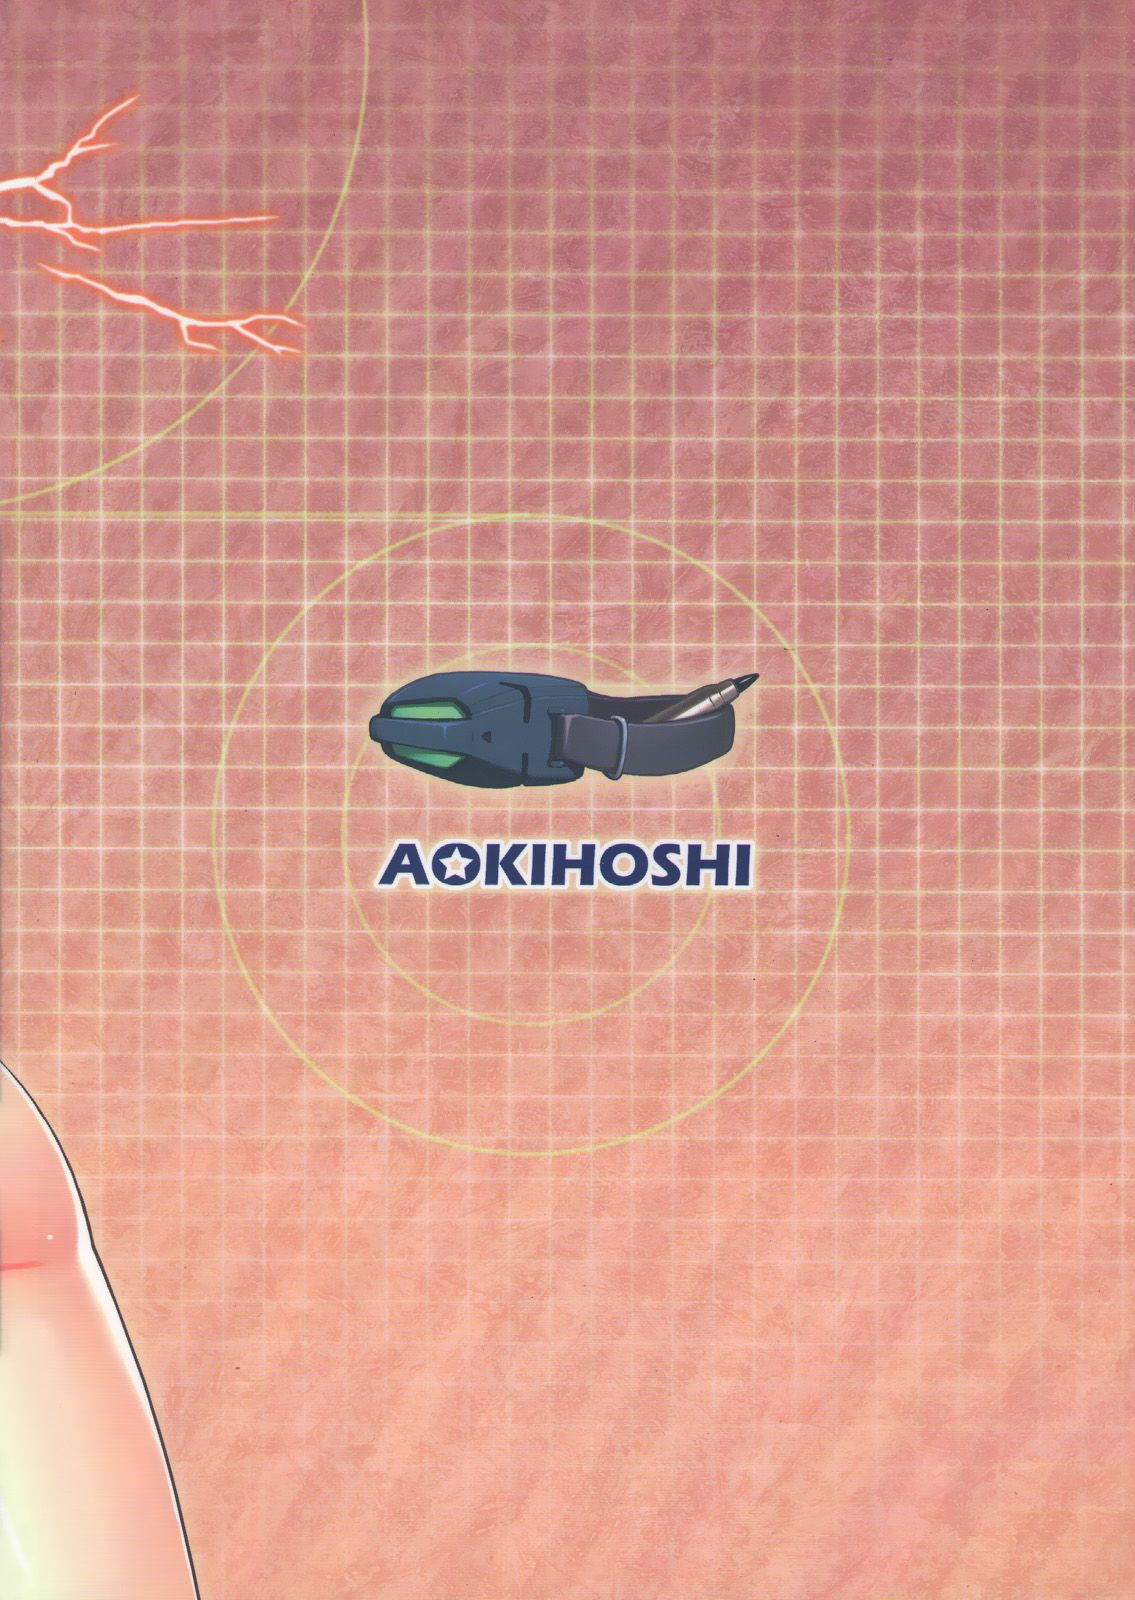 (cwt27) aokihoshi (flyking) toaru houkou geen kekkan denki een bepaalde dwalen radio geluid (toaru majutsu geen index) ehcove